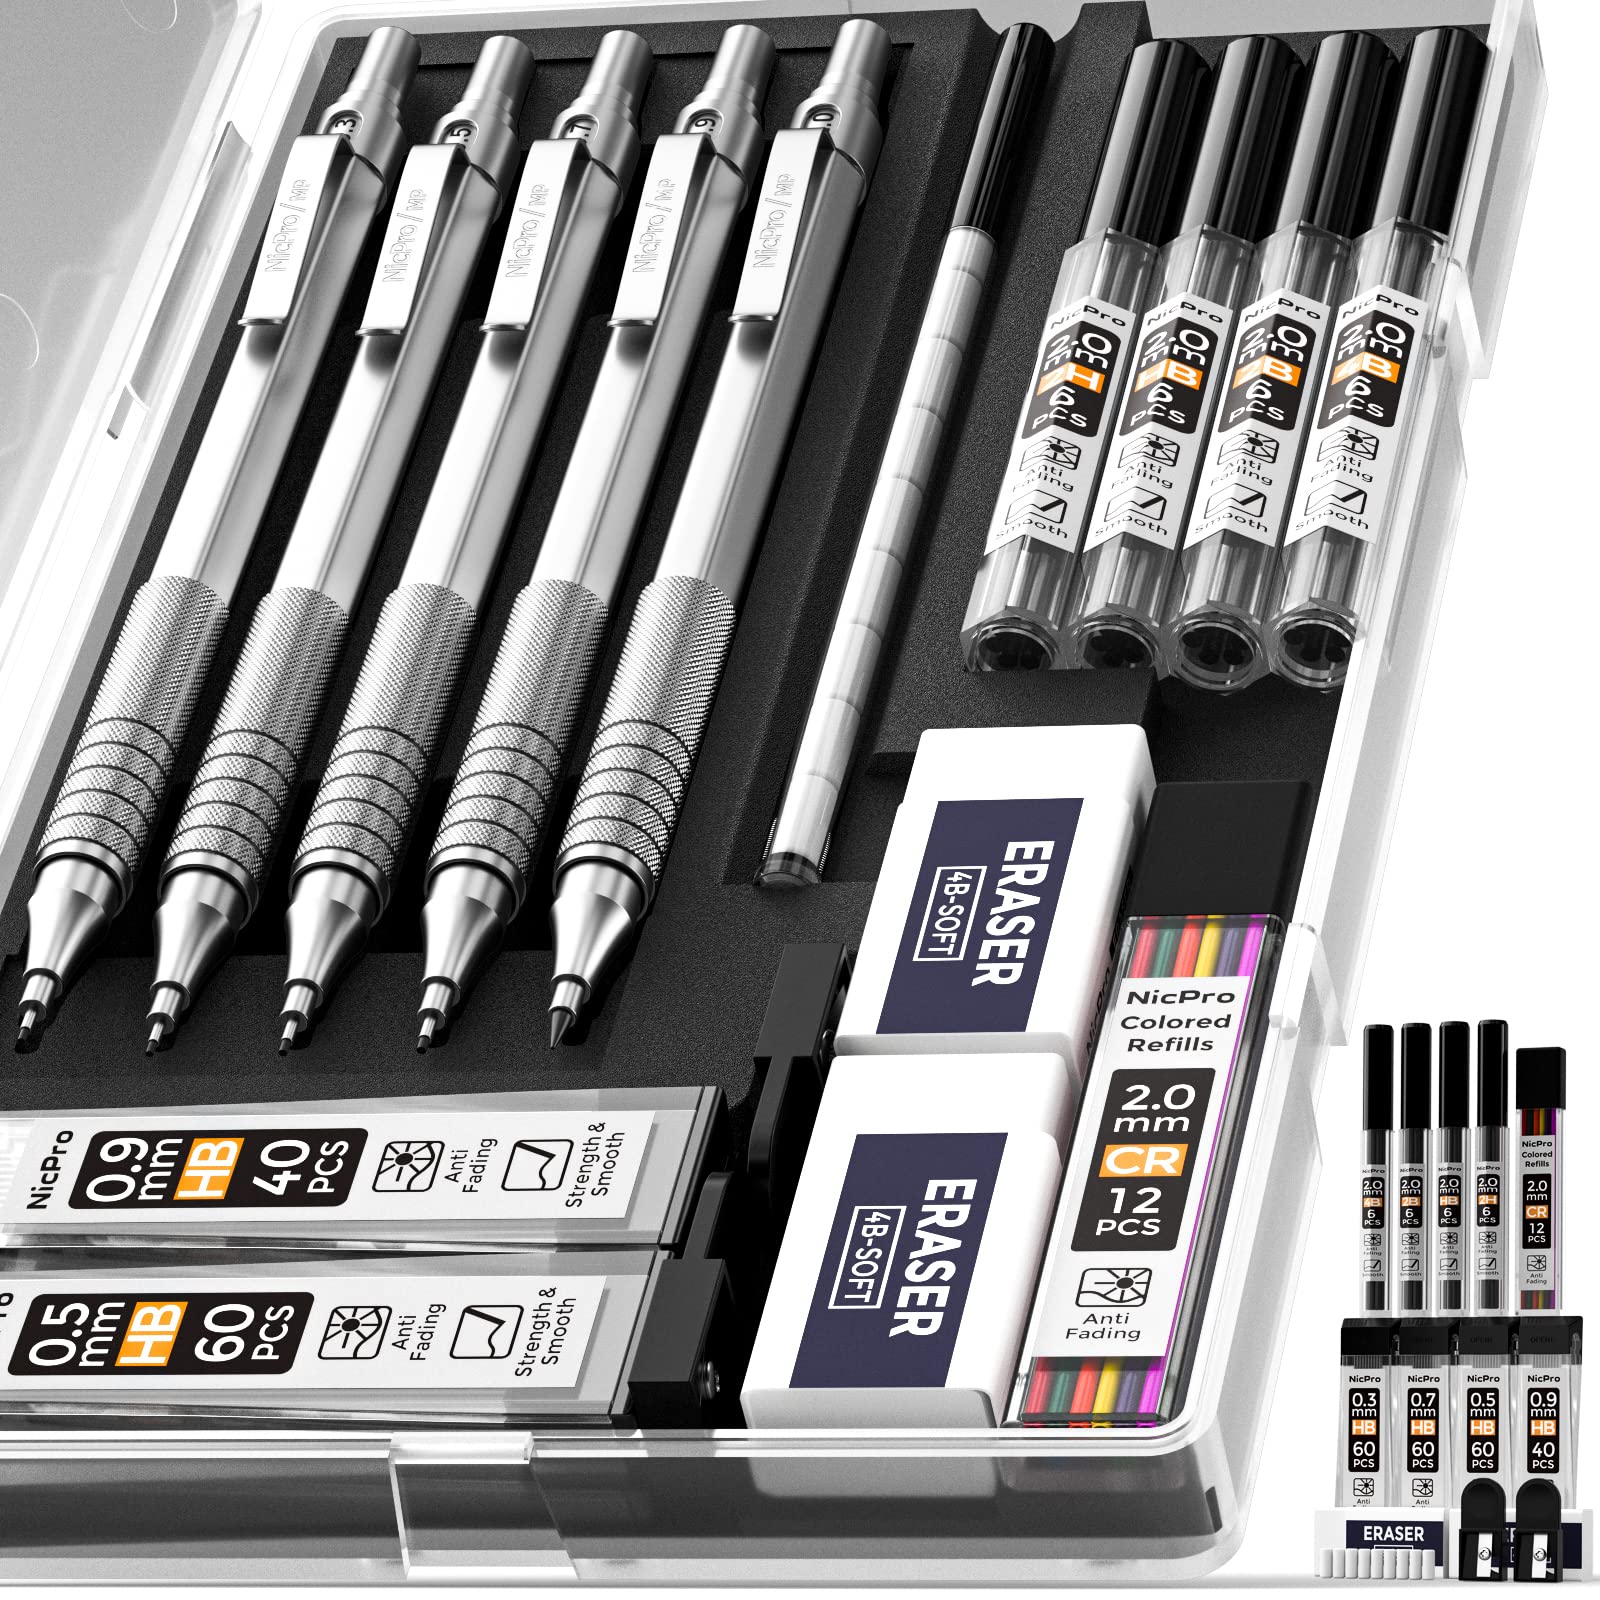 1 Nicpro 5 Pcs Art Mechanical Pencil Set, Metal Drafting Pencils